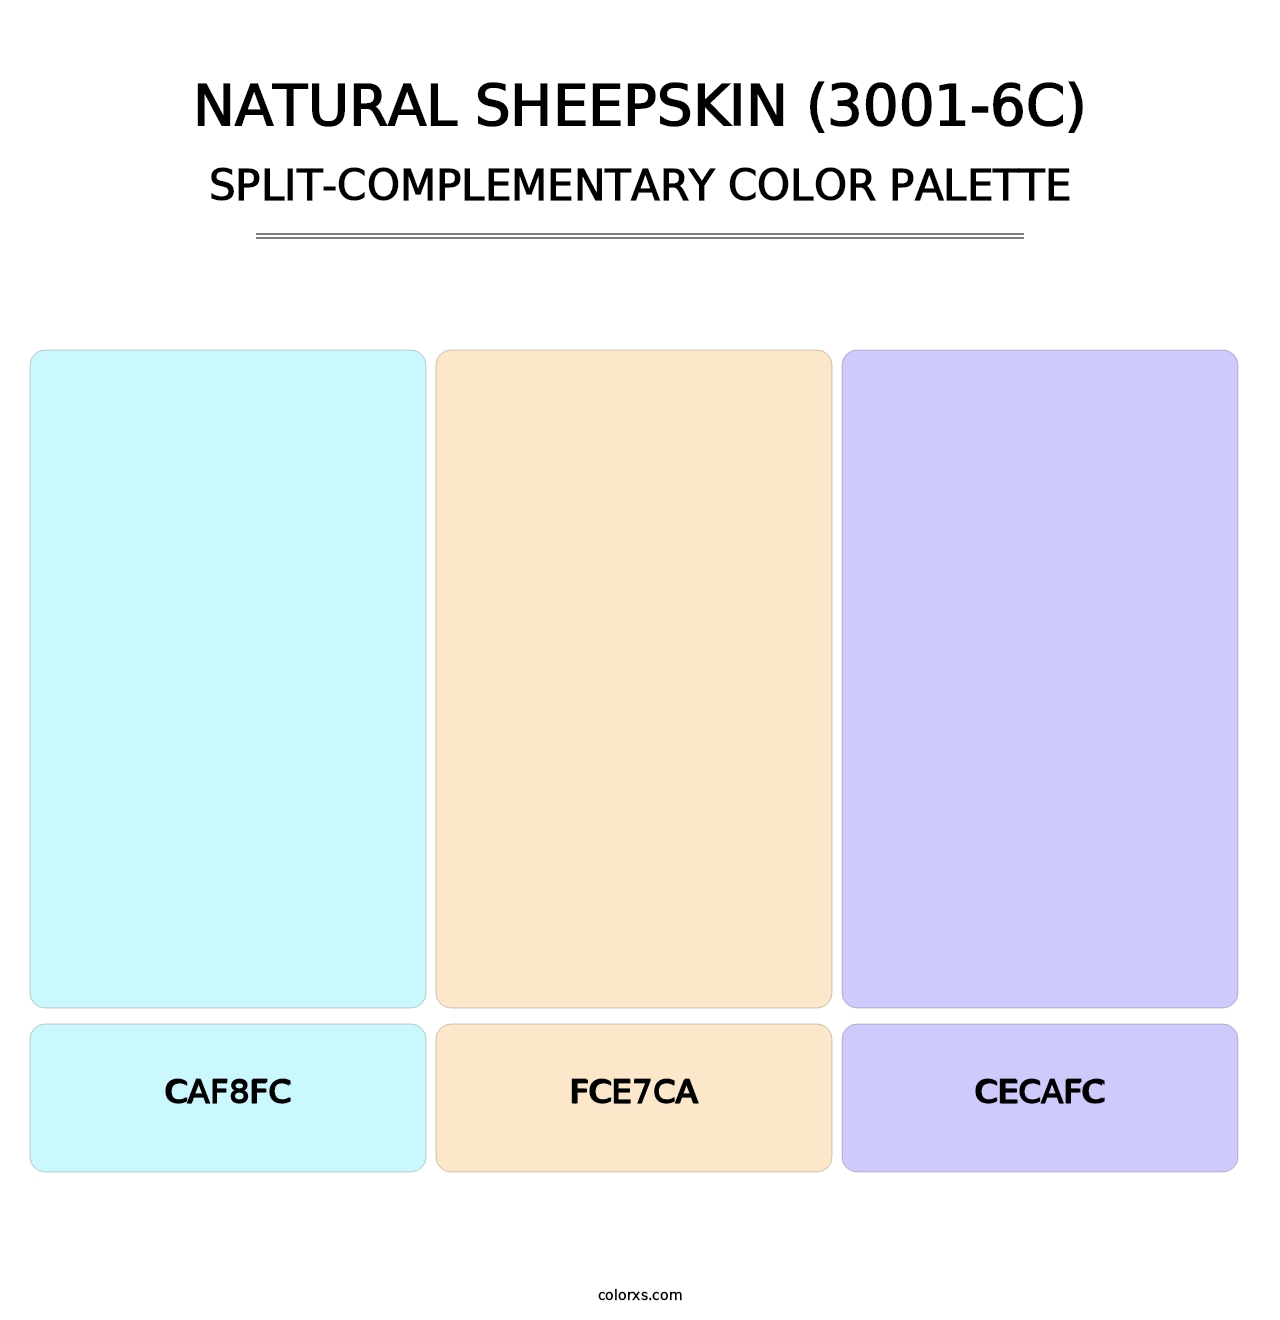 Natural Sheepskin (3001-6C) - Split-Complementary Color Palette